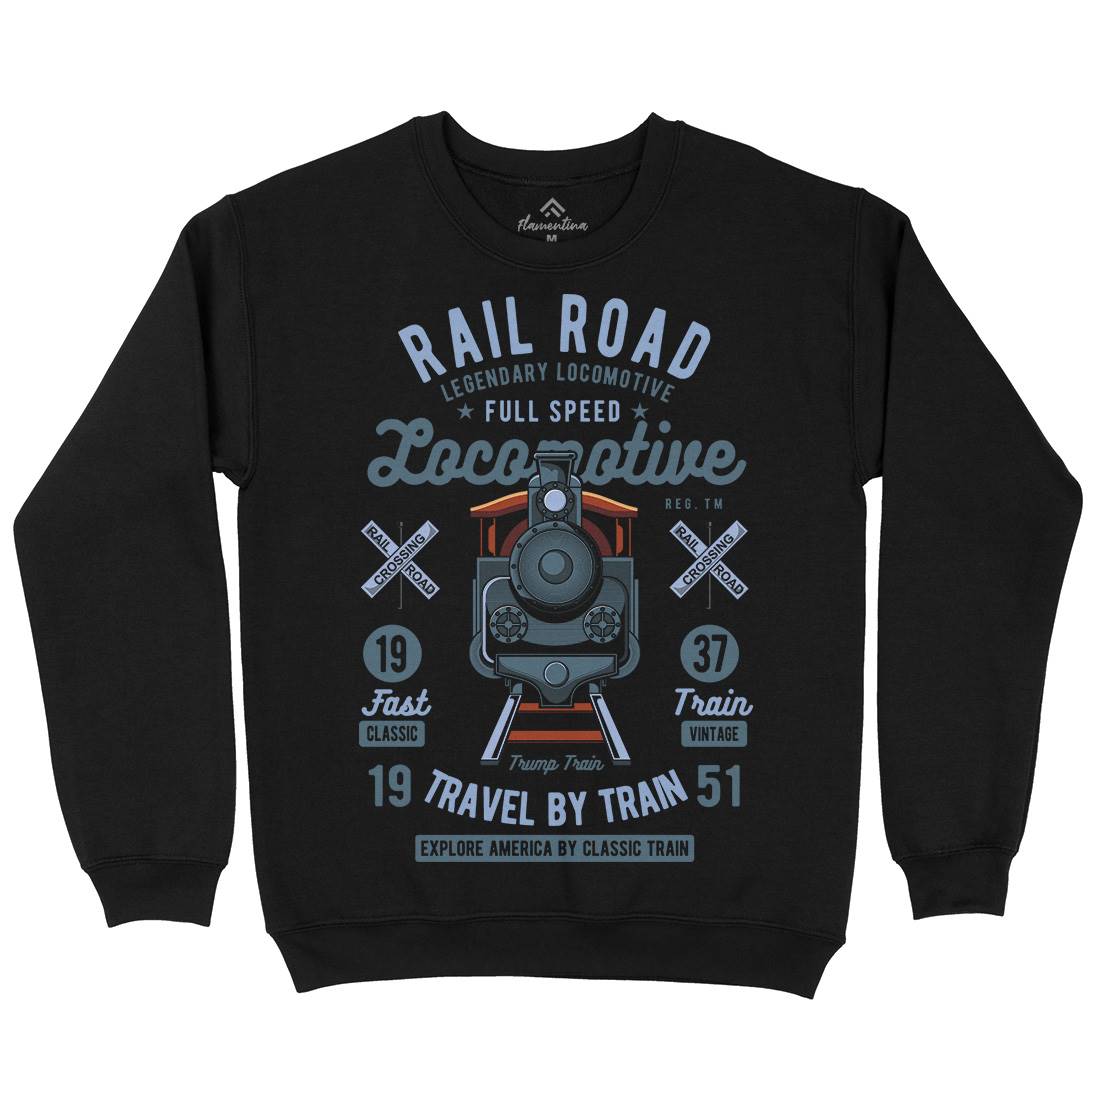 Rail Road Kids Crew Neck Sweatshirt Vehicles C423